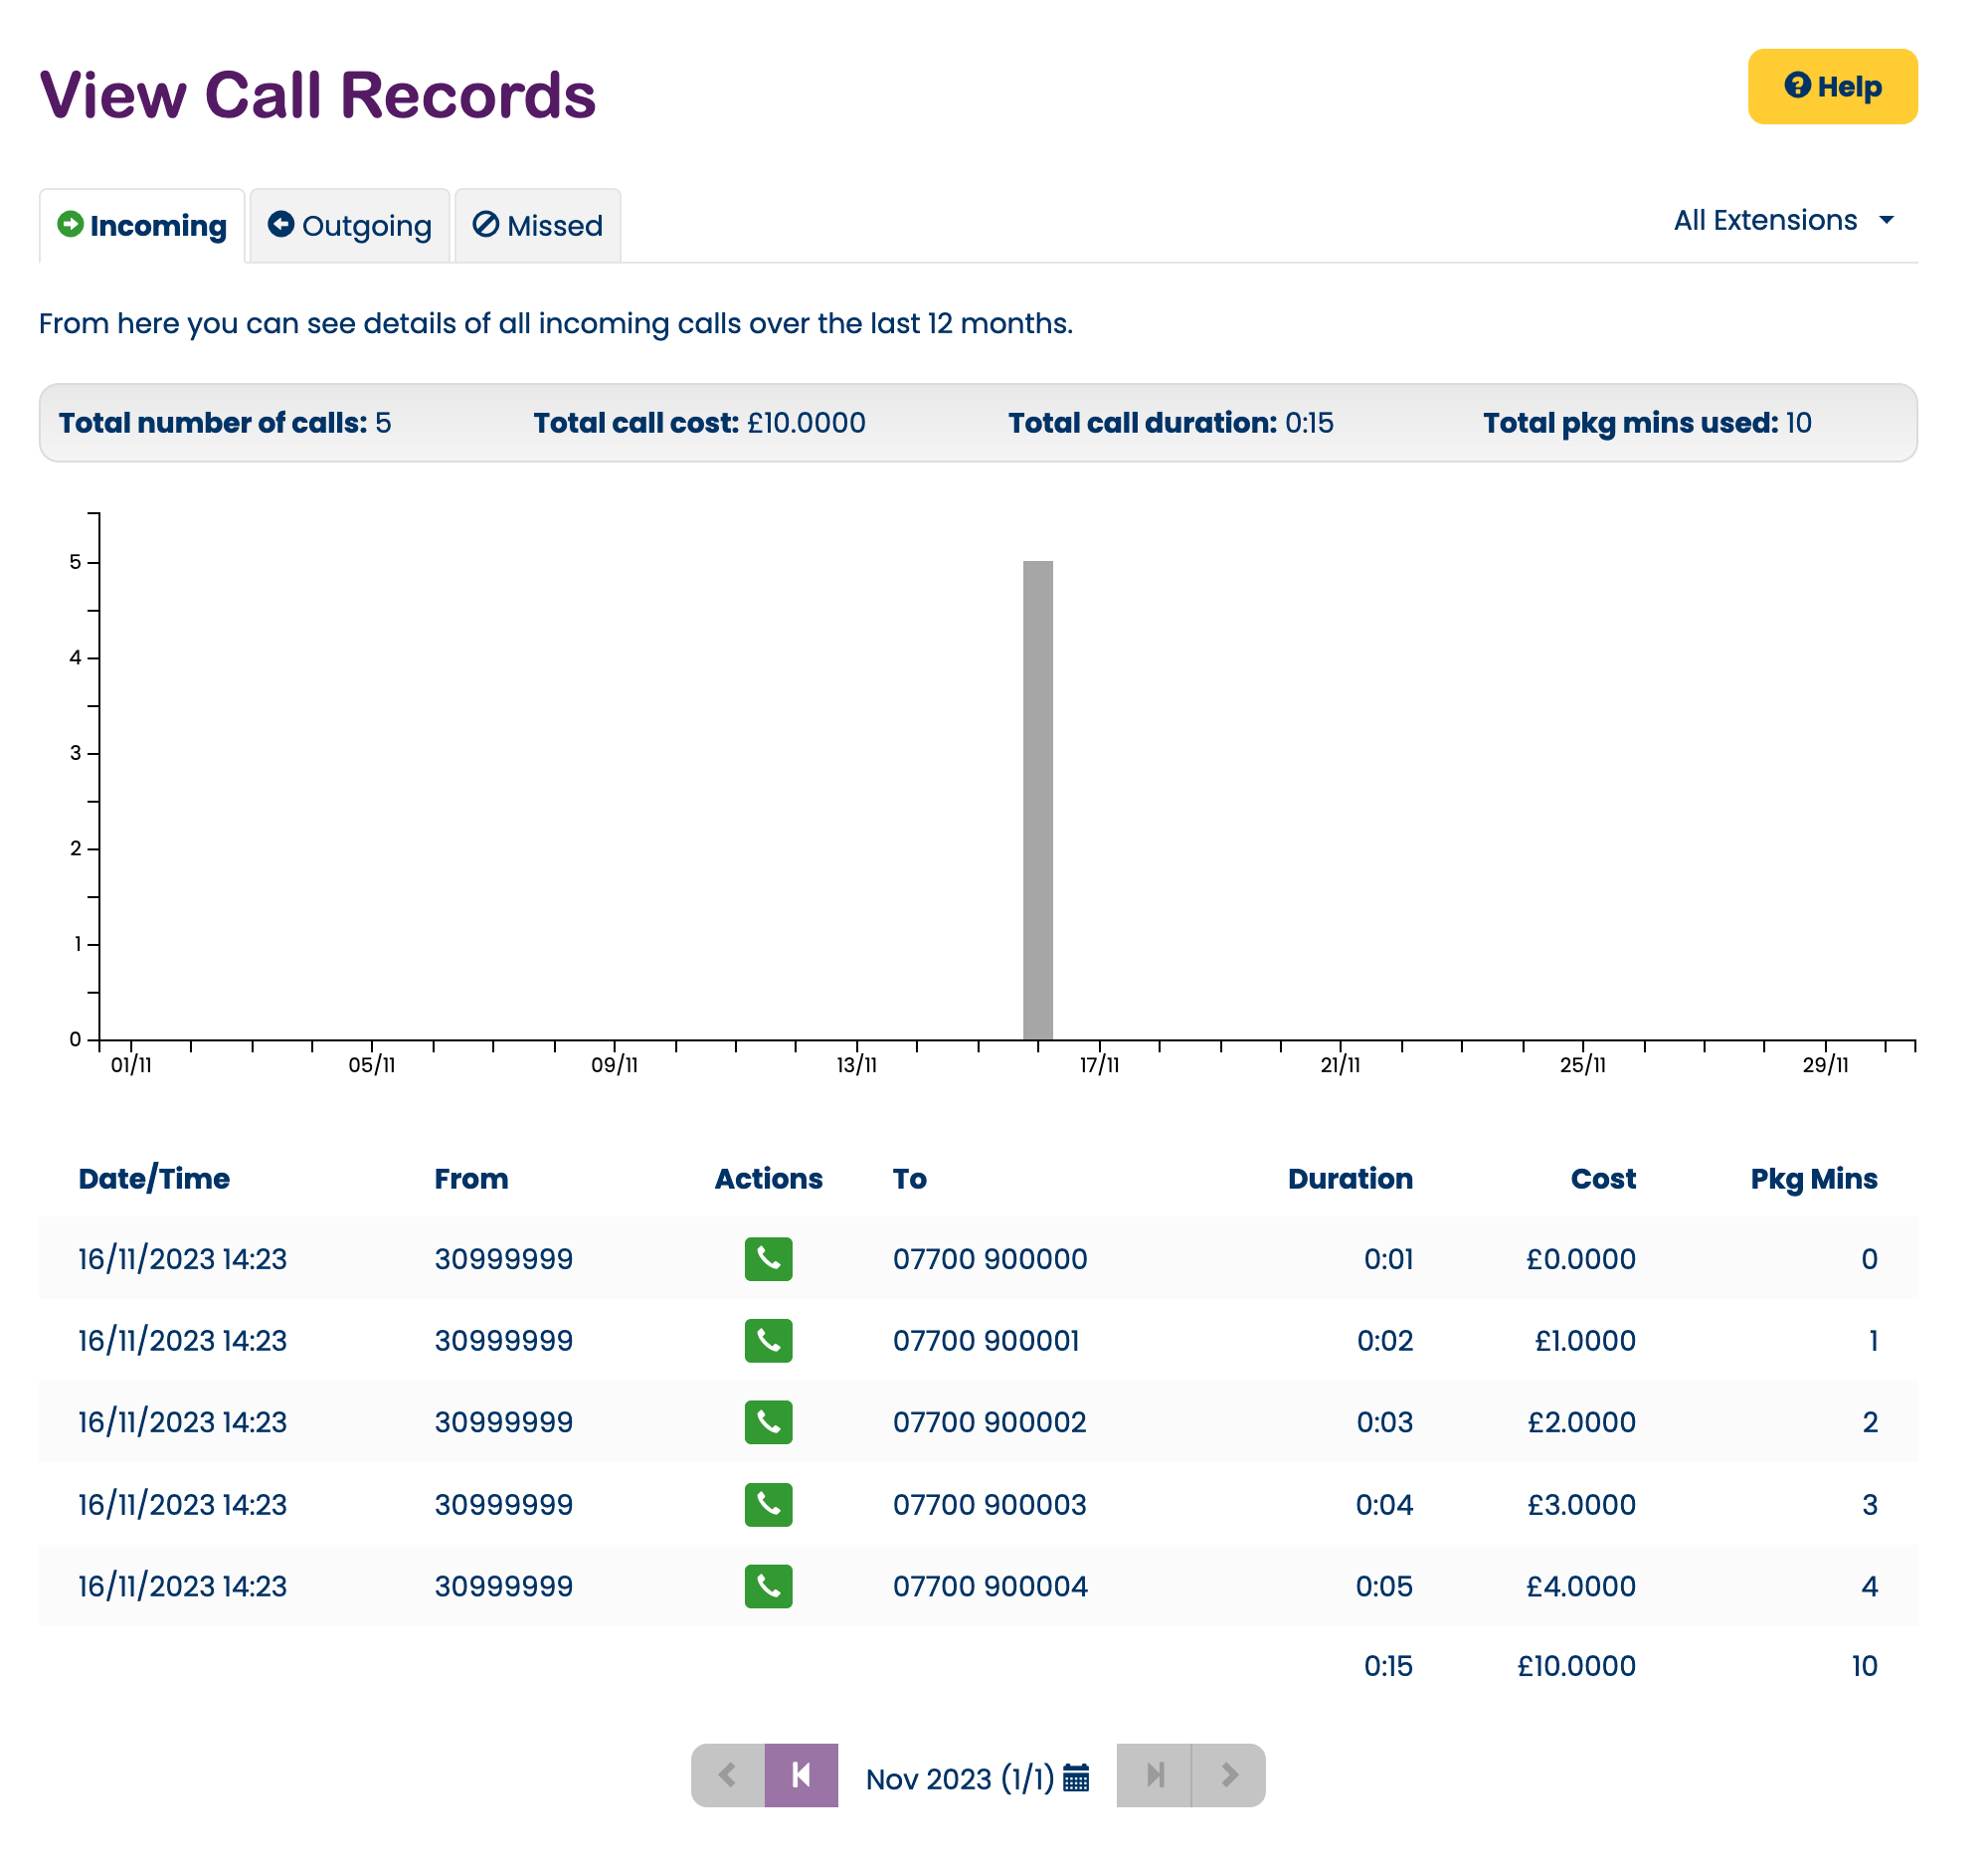 Inbound call records